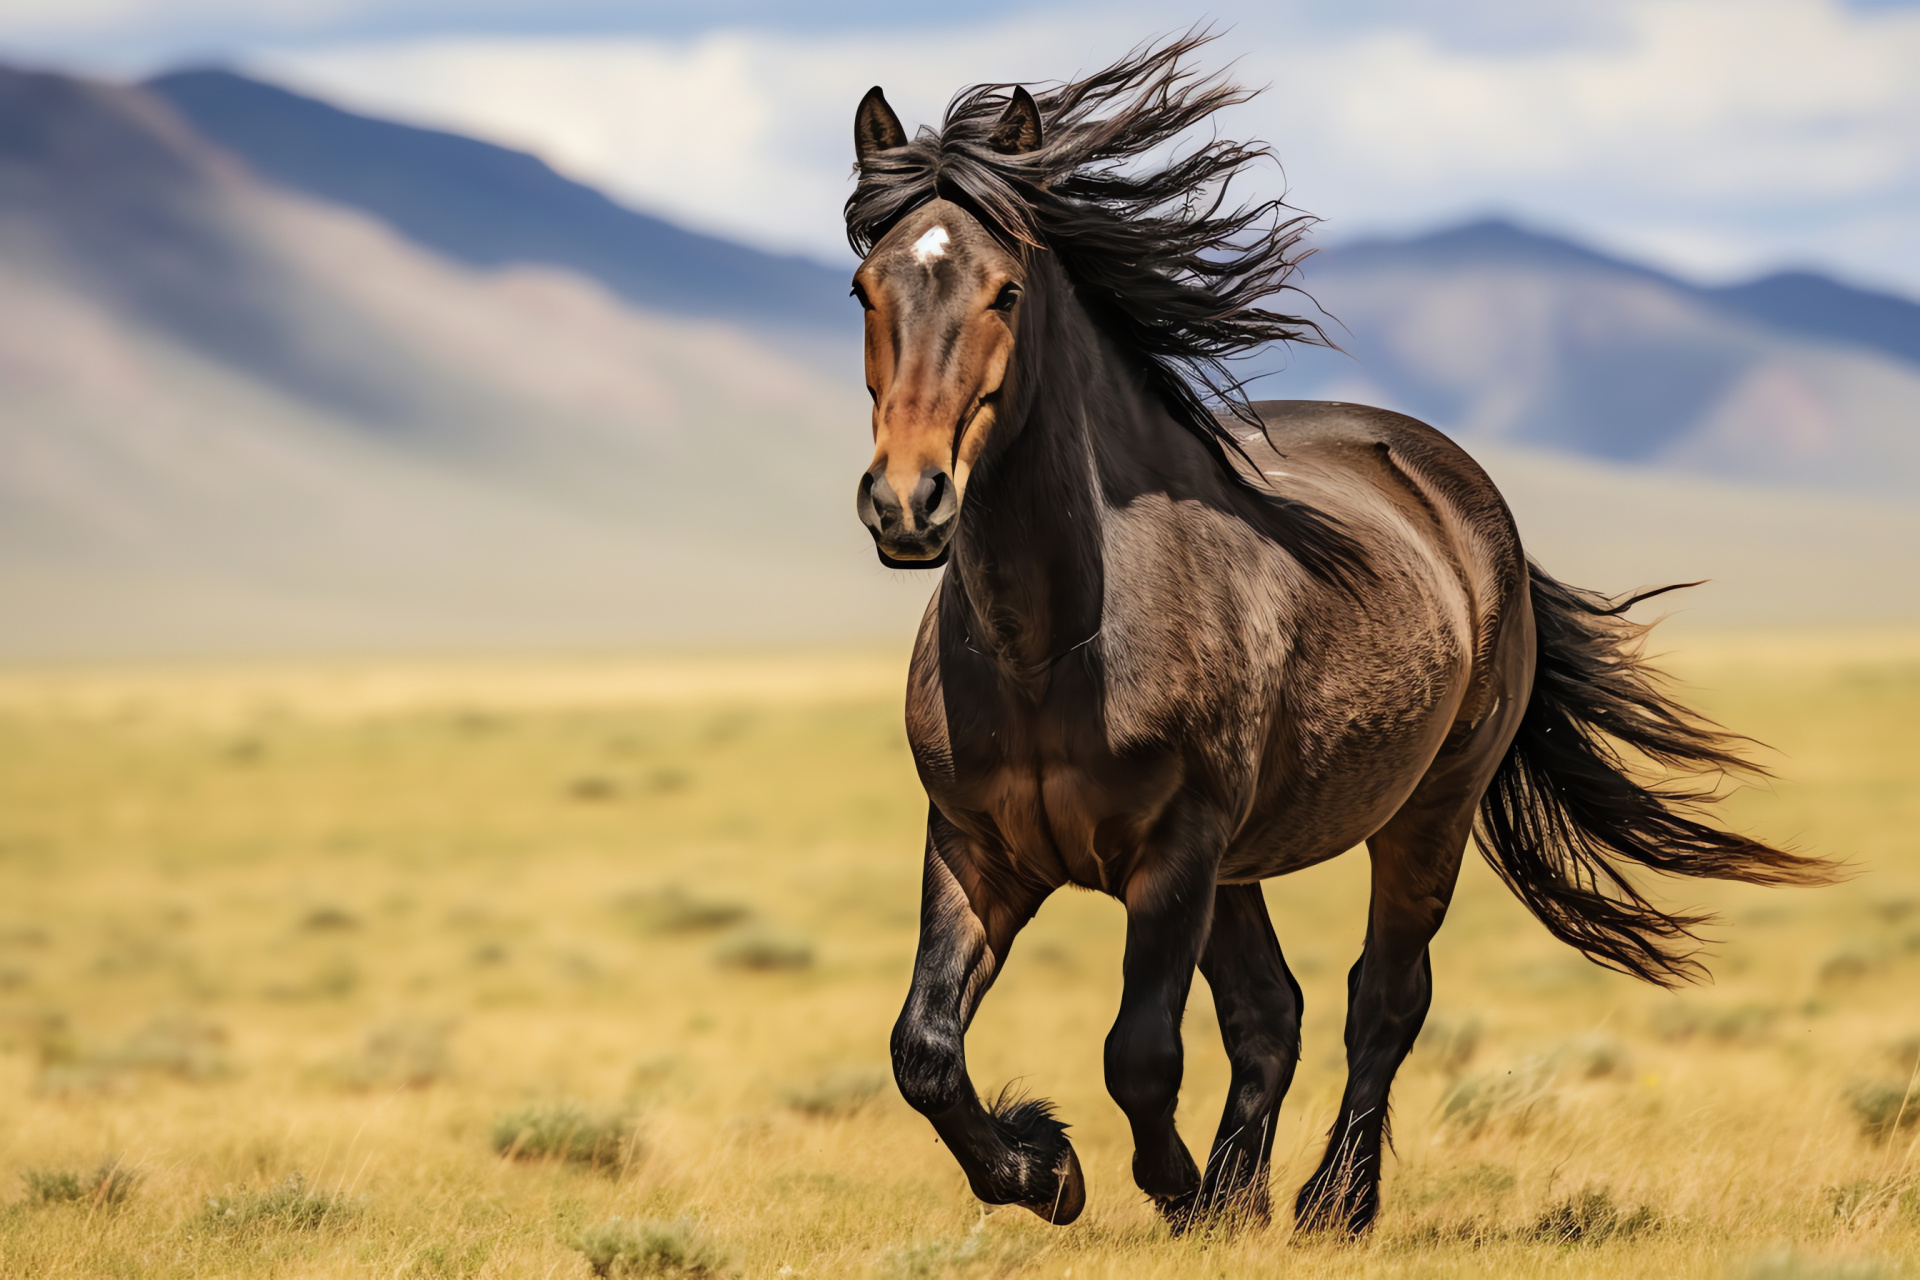 Wild Horse freedom, Dun coat equine, Black mane silhouette, Mysterious gaze, Untamed spirit, HD Desktop Image